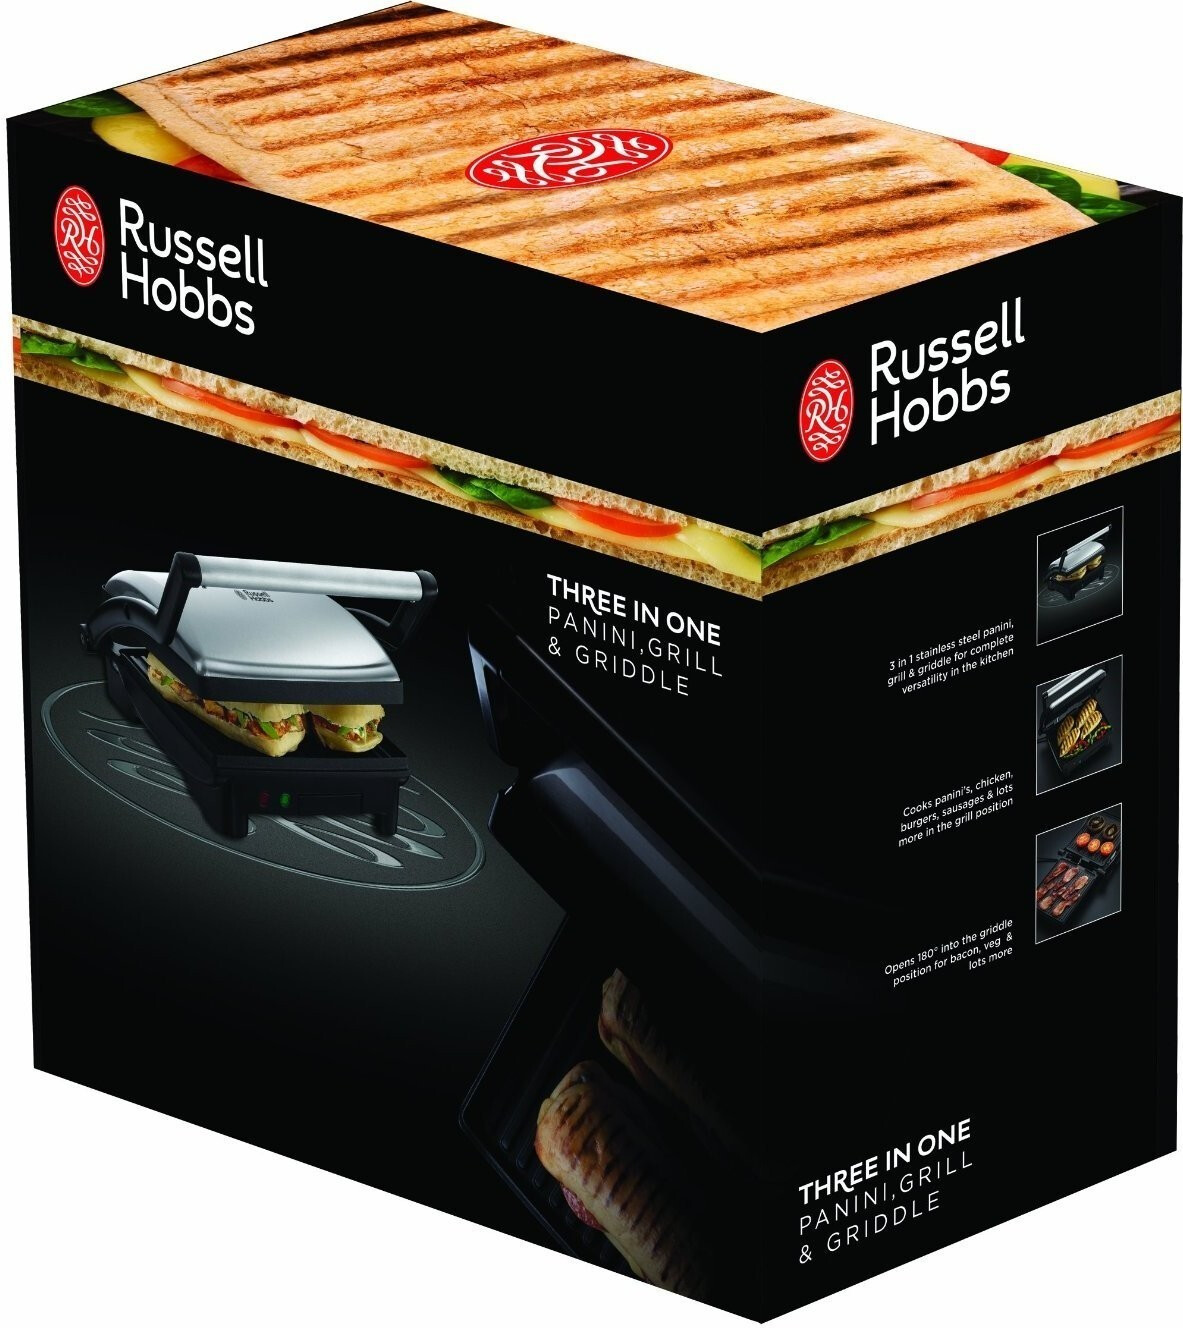 Tristar Appareil à Sandwich SA3050 Grill panini au meilleur prix